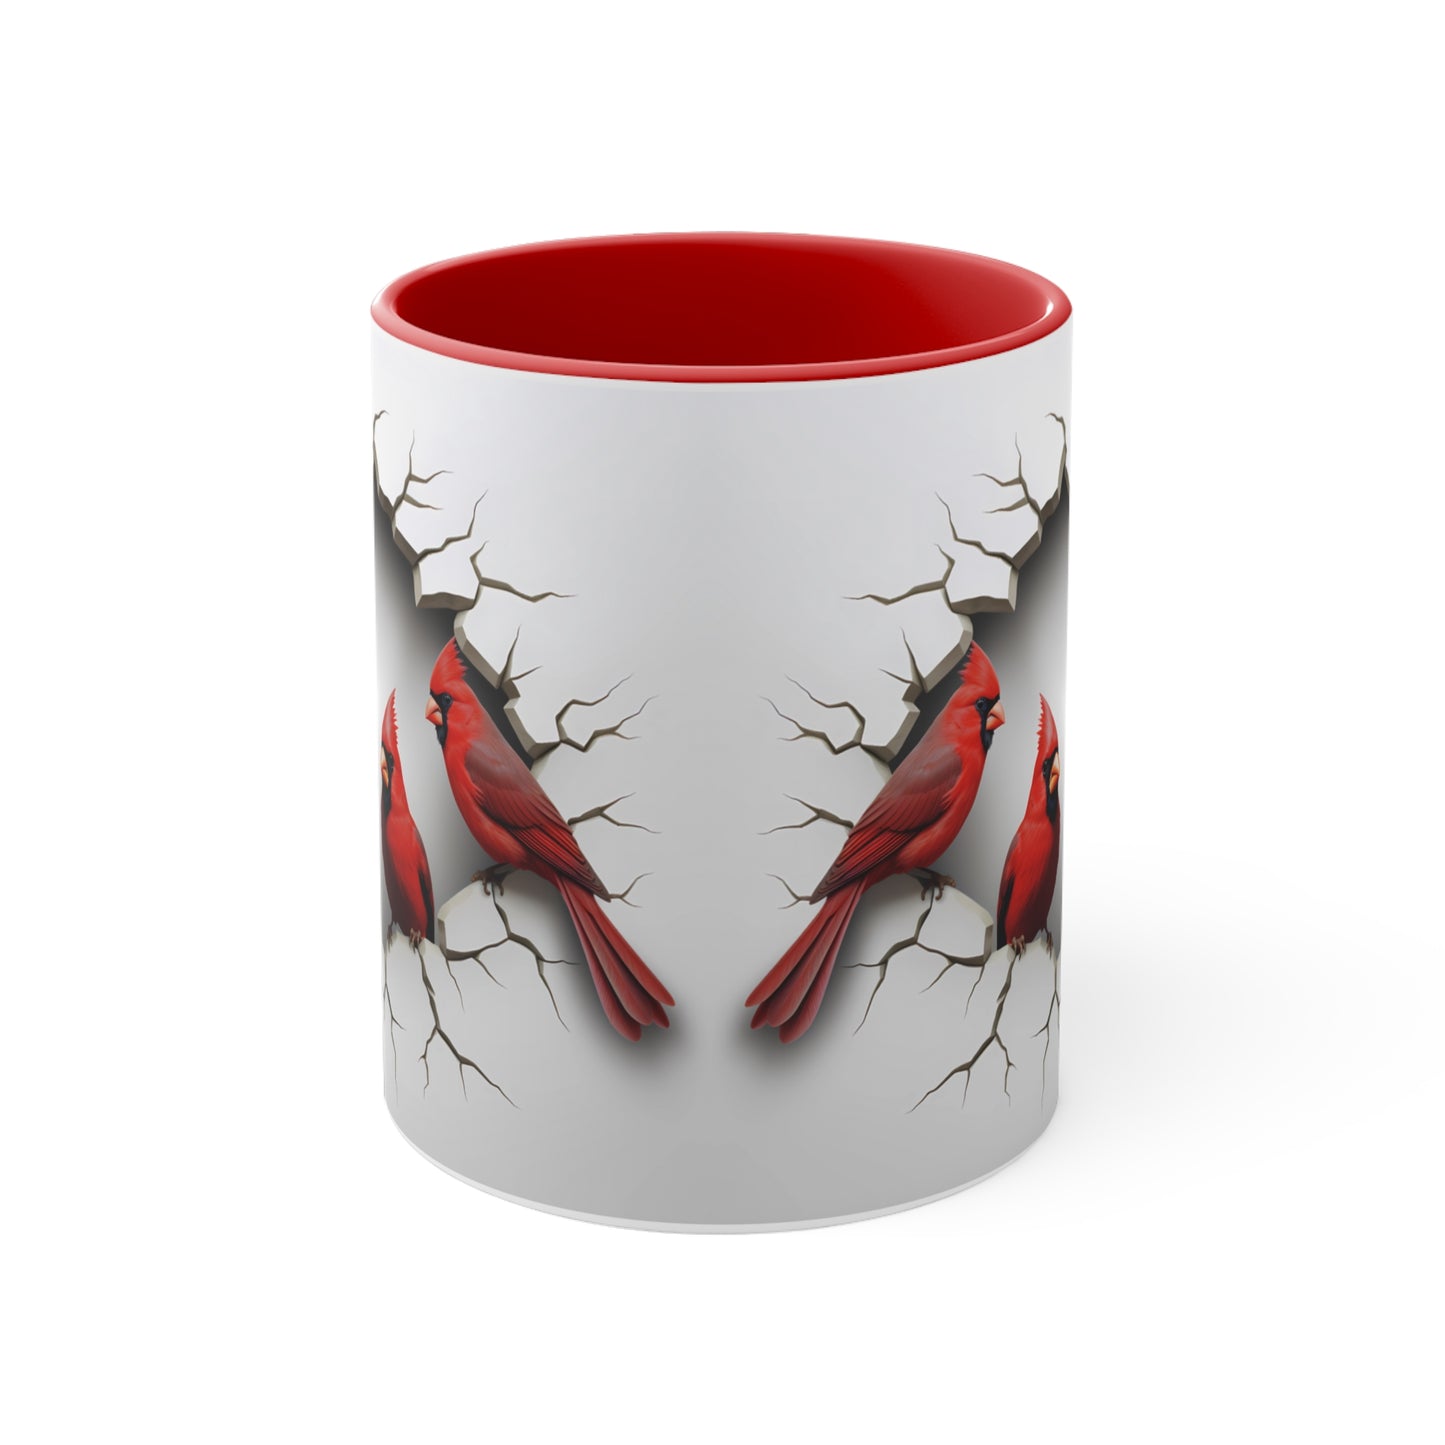 CARDINAL MUG - Cardinals Mugs - Black, Red - Mugscity - Free Shipping